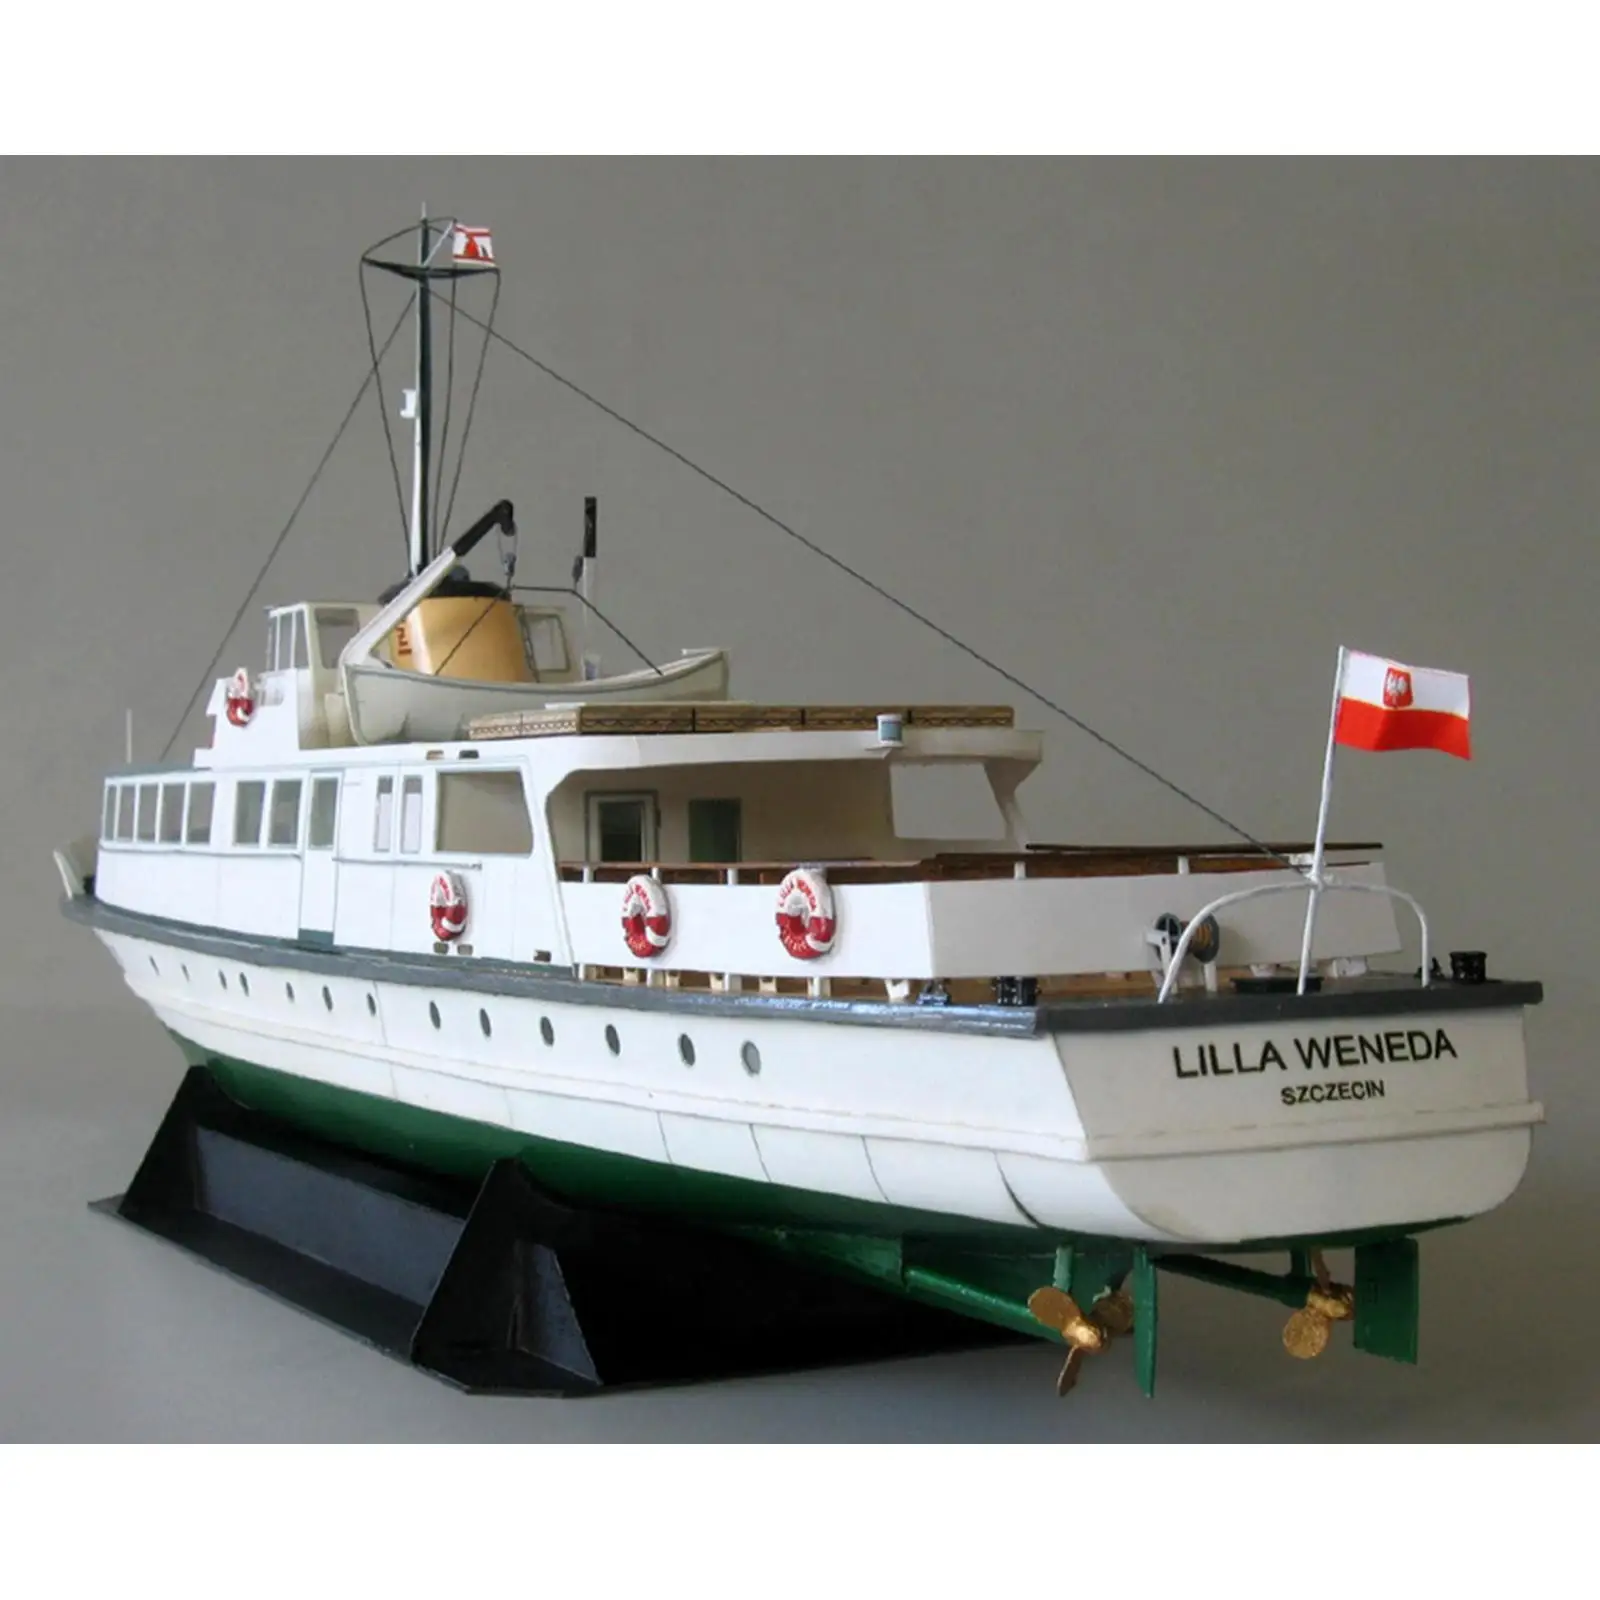 3D 1/100 Polish Lilla Weneda Paper Boat Model Toy Home Decoration Ornaments